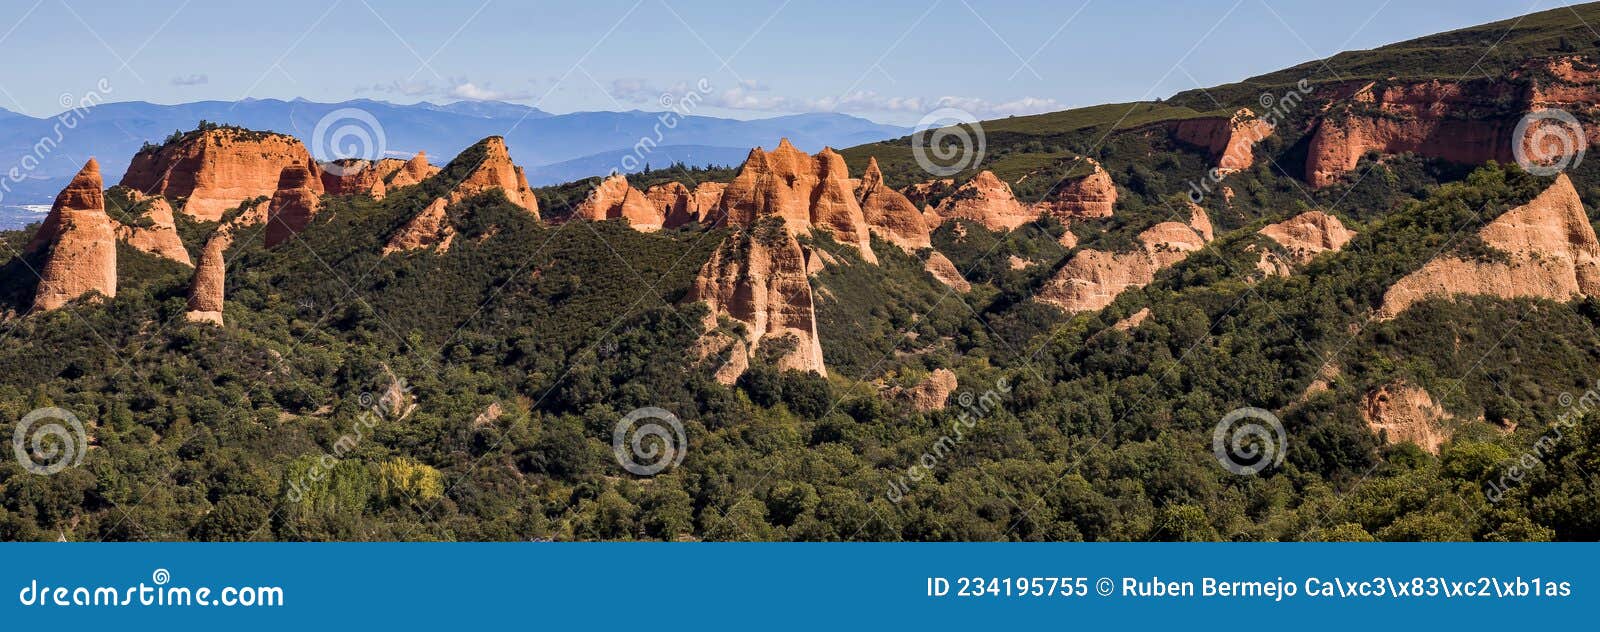 panoramica de las mÃÂ©dulas, collapsed mountains in the old roman gold mine. el bierzo